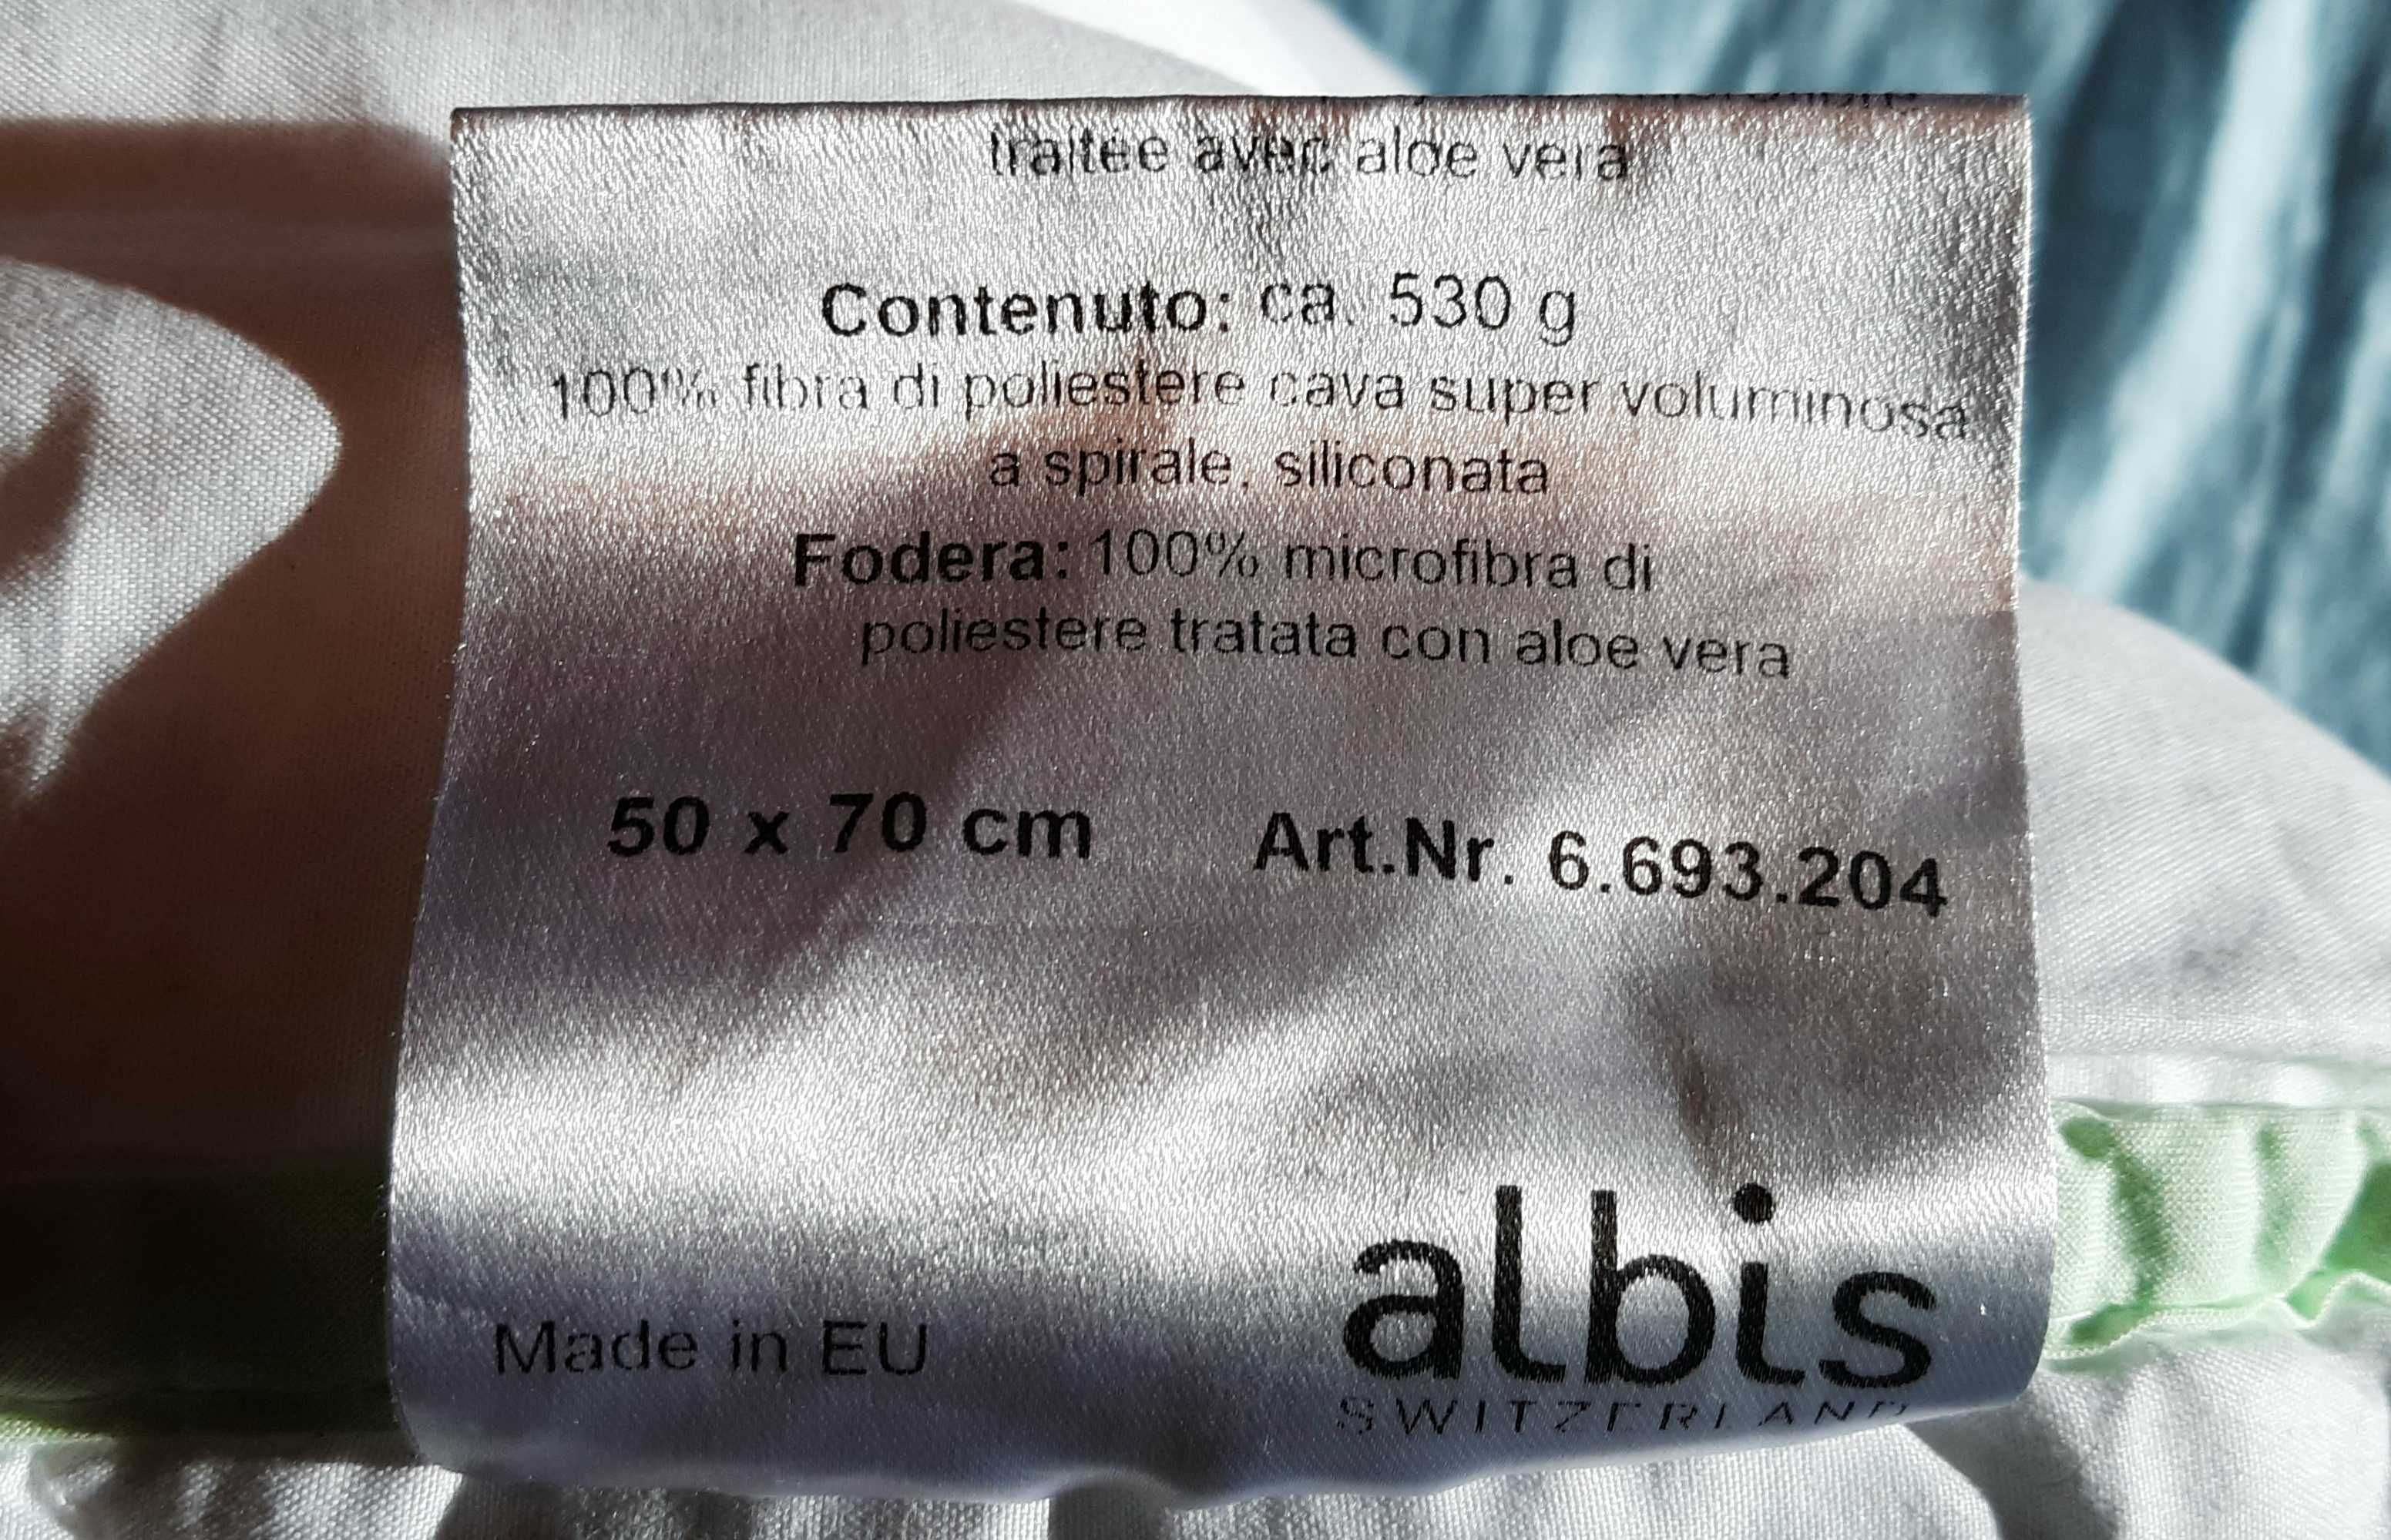 Подушка Albis, Швейцарія, 50х70см,100% microfibra, aloe Vera, 530g.